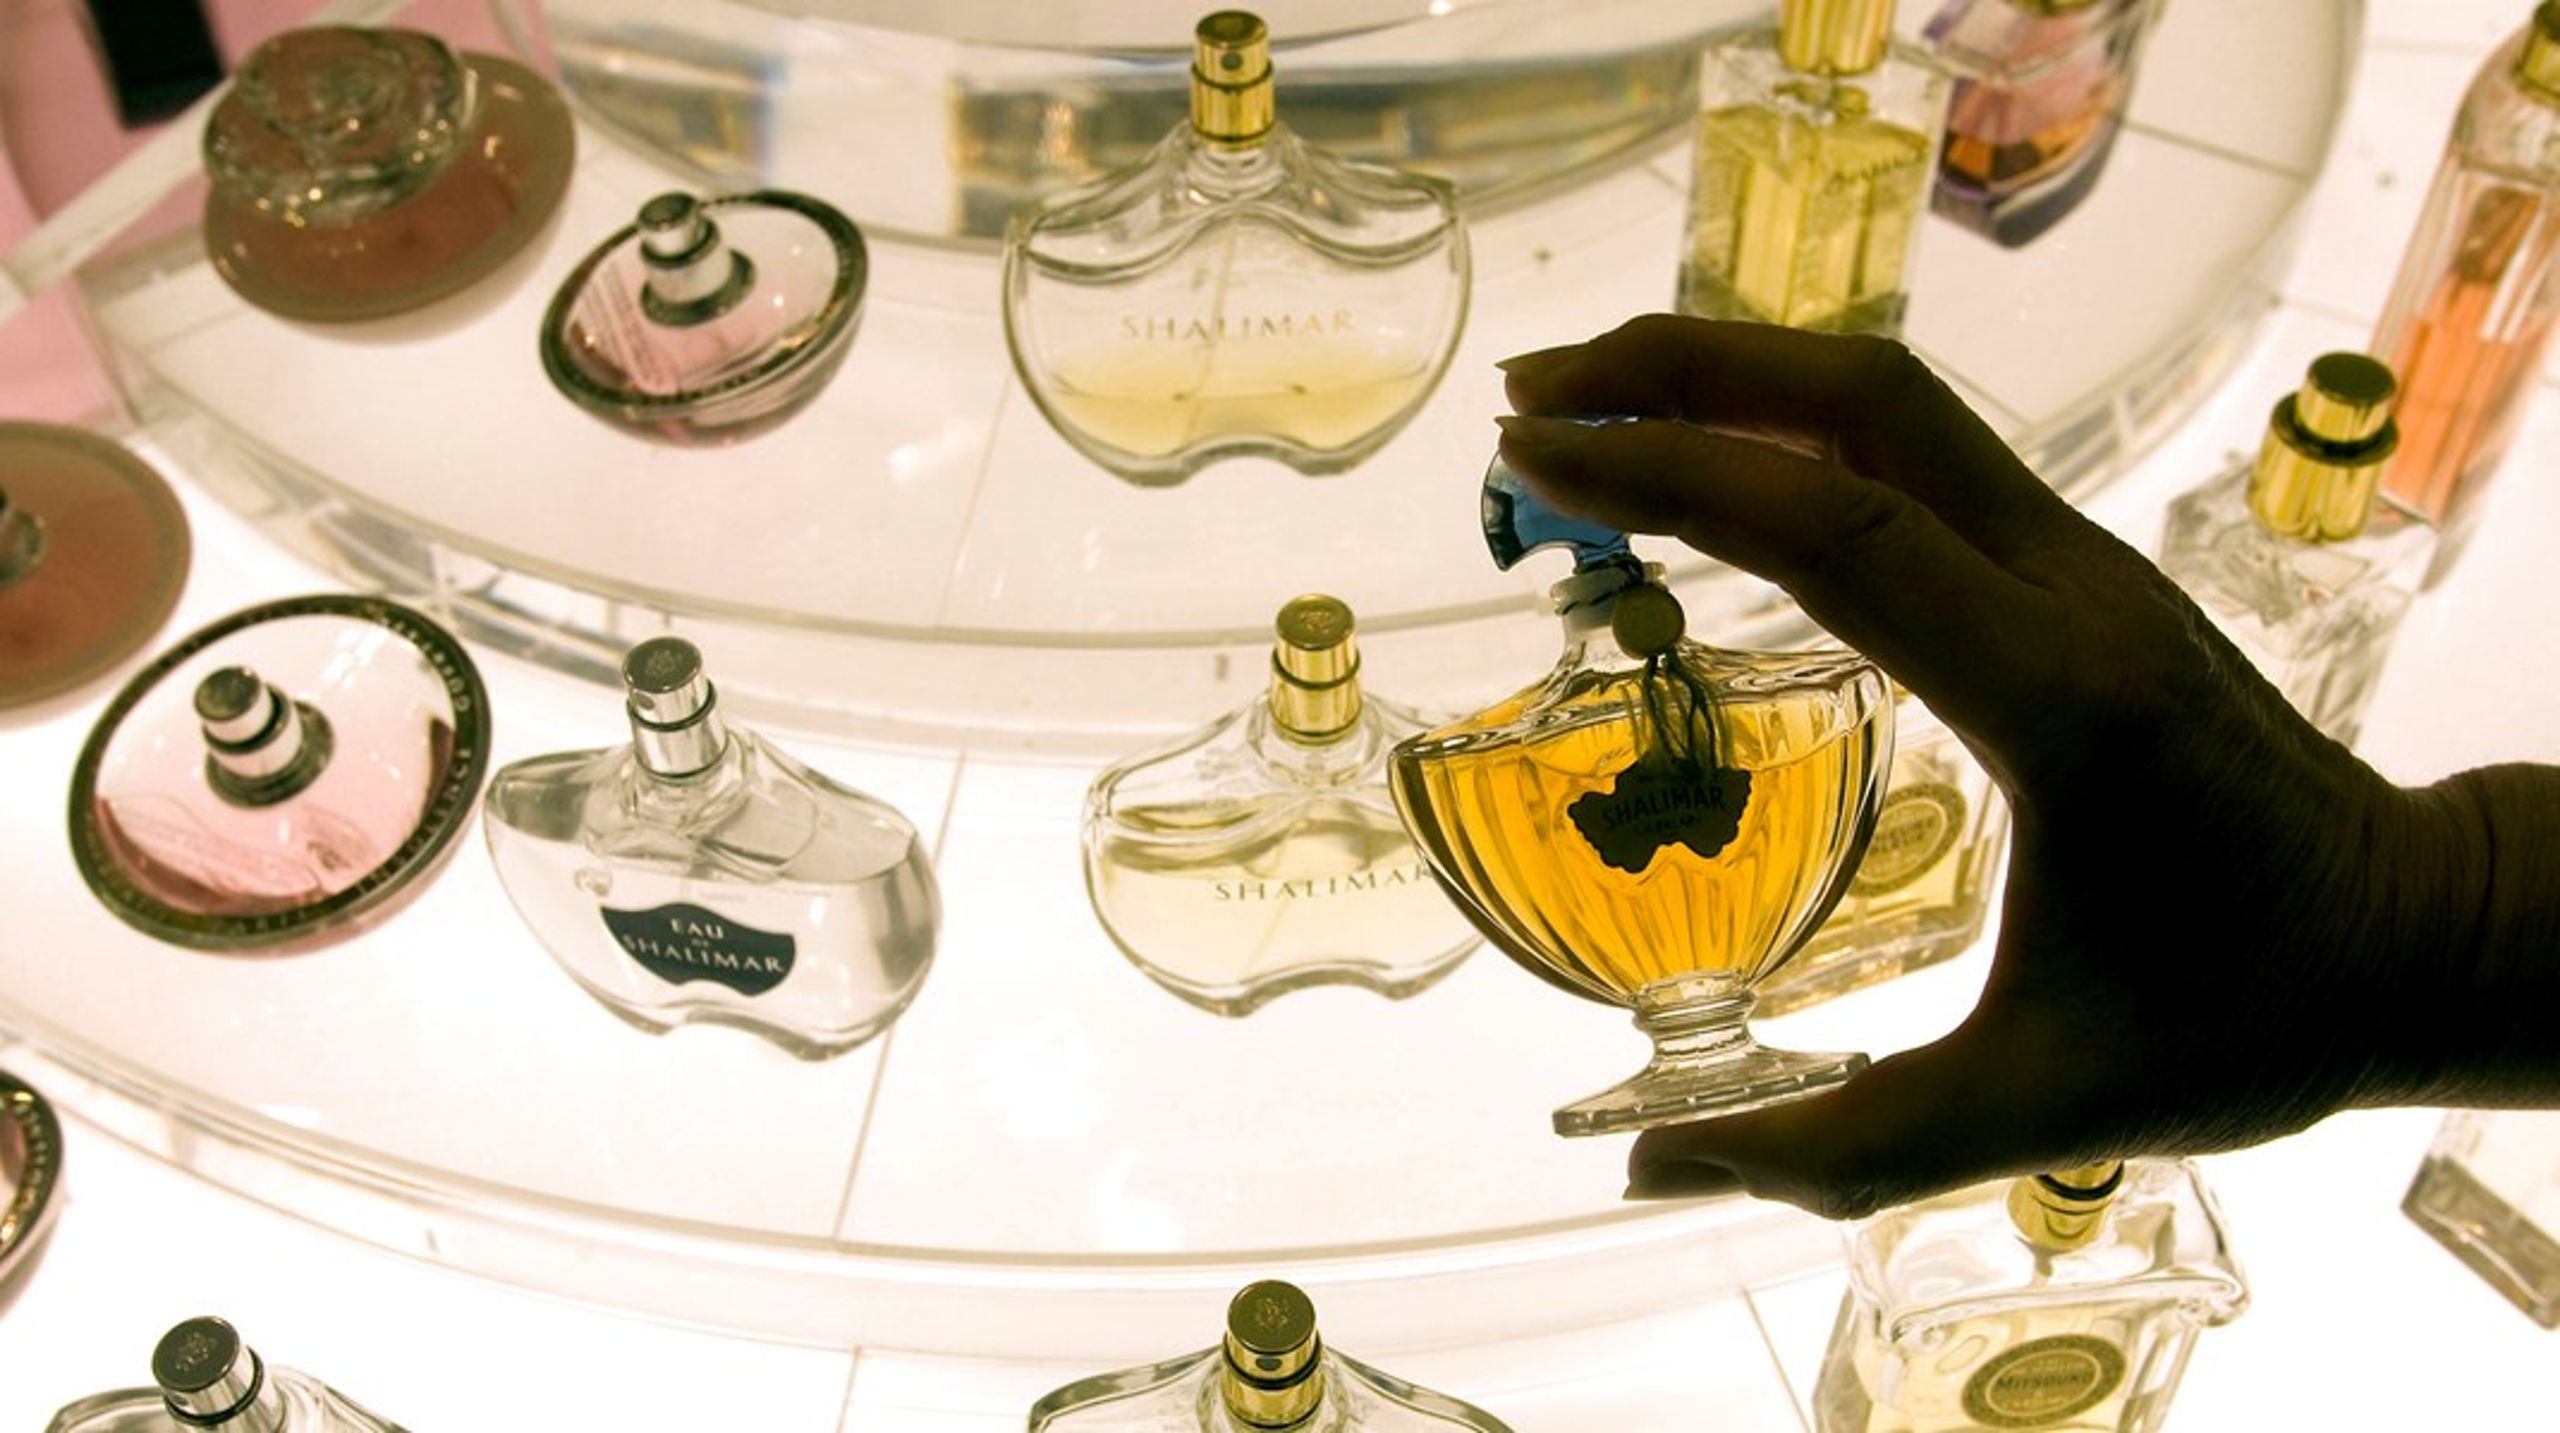 Hudallergi over for kemikalier som parfume er et stort sundhedsproblem i Danmark og i EU, skriver&nbsp;Anne Holm Hansen.